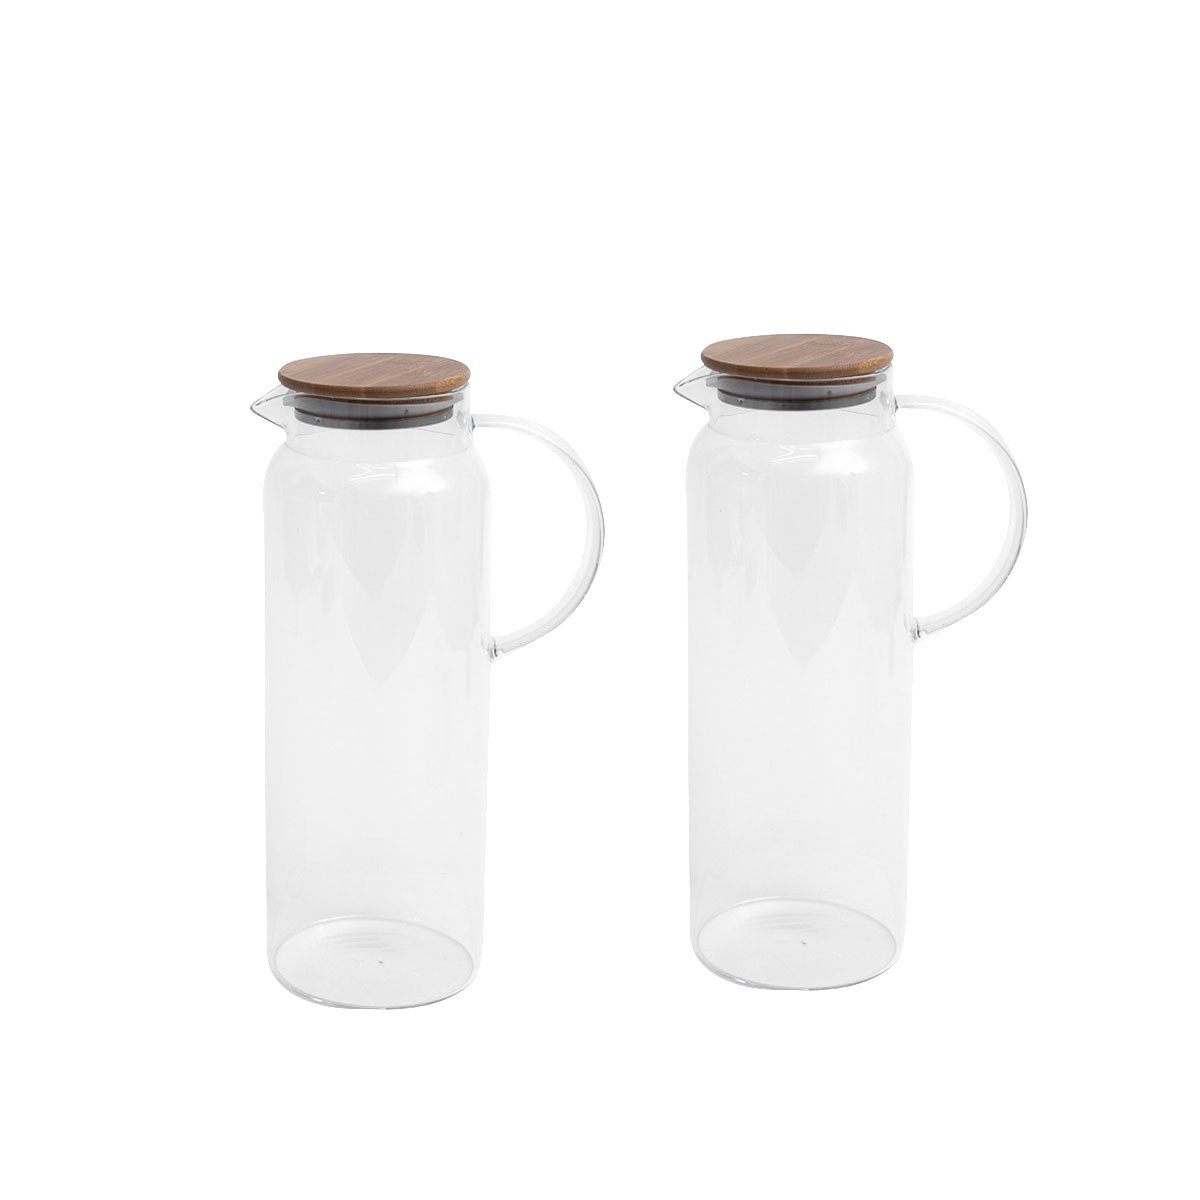 Kit 2 jarras de vidro borossilicato suco com tampa de bambu 2L - Oikos